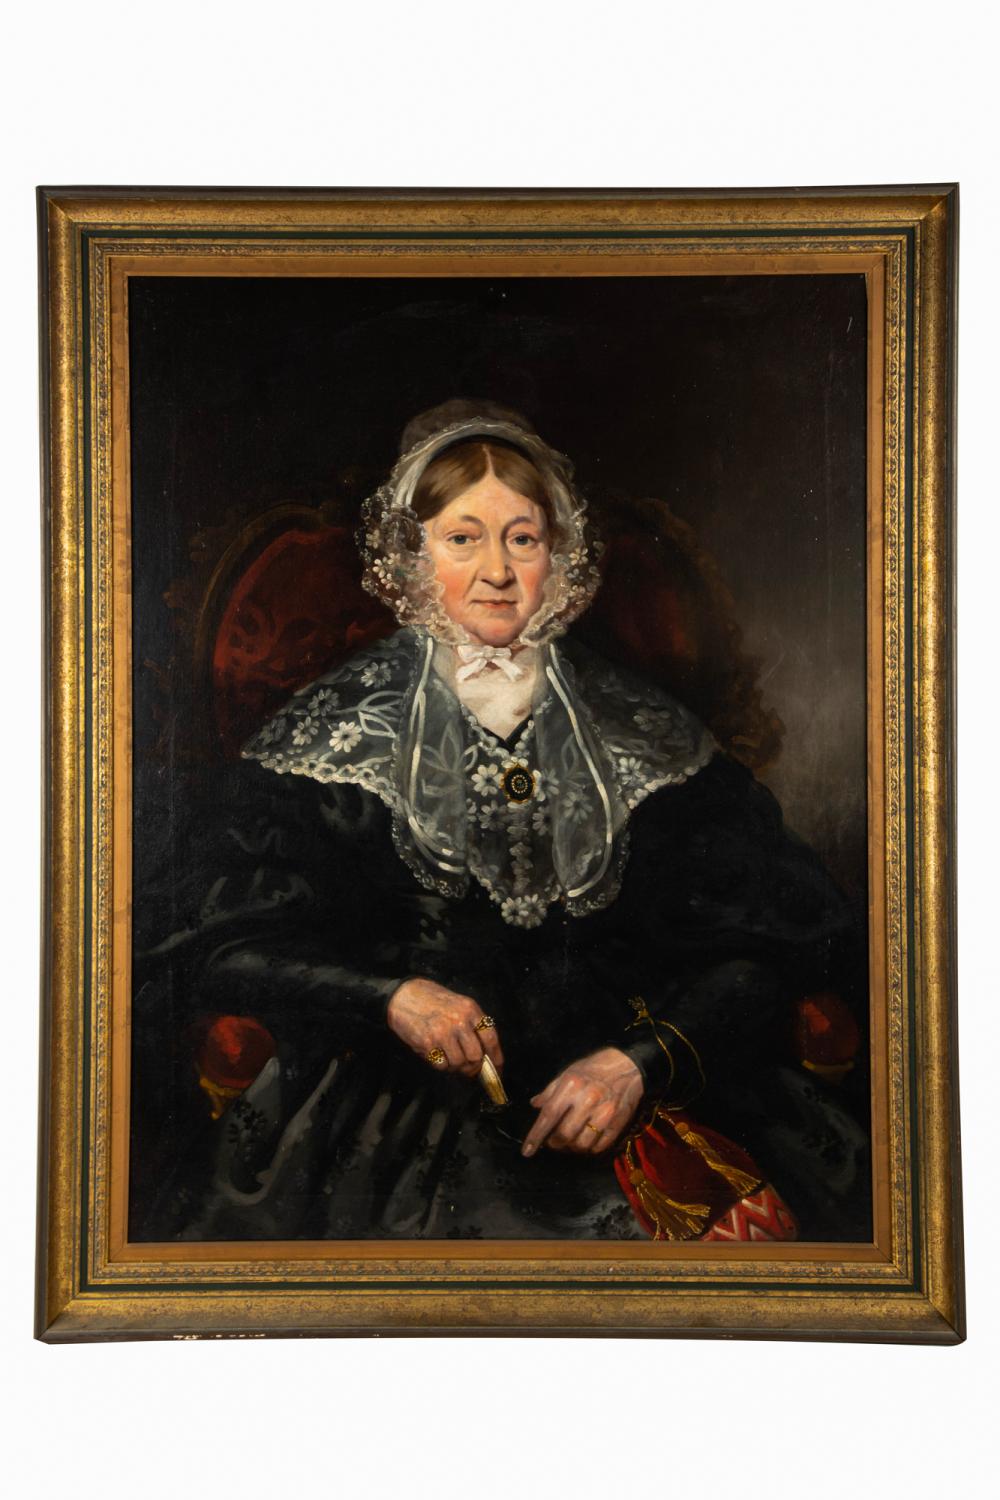 PORTRAIT OF A WOMANoil on canvas 332686